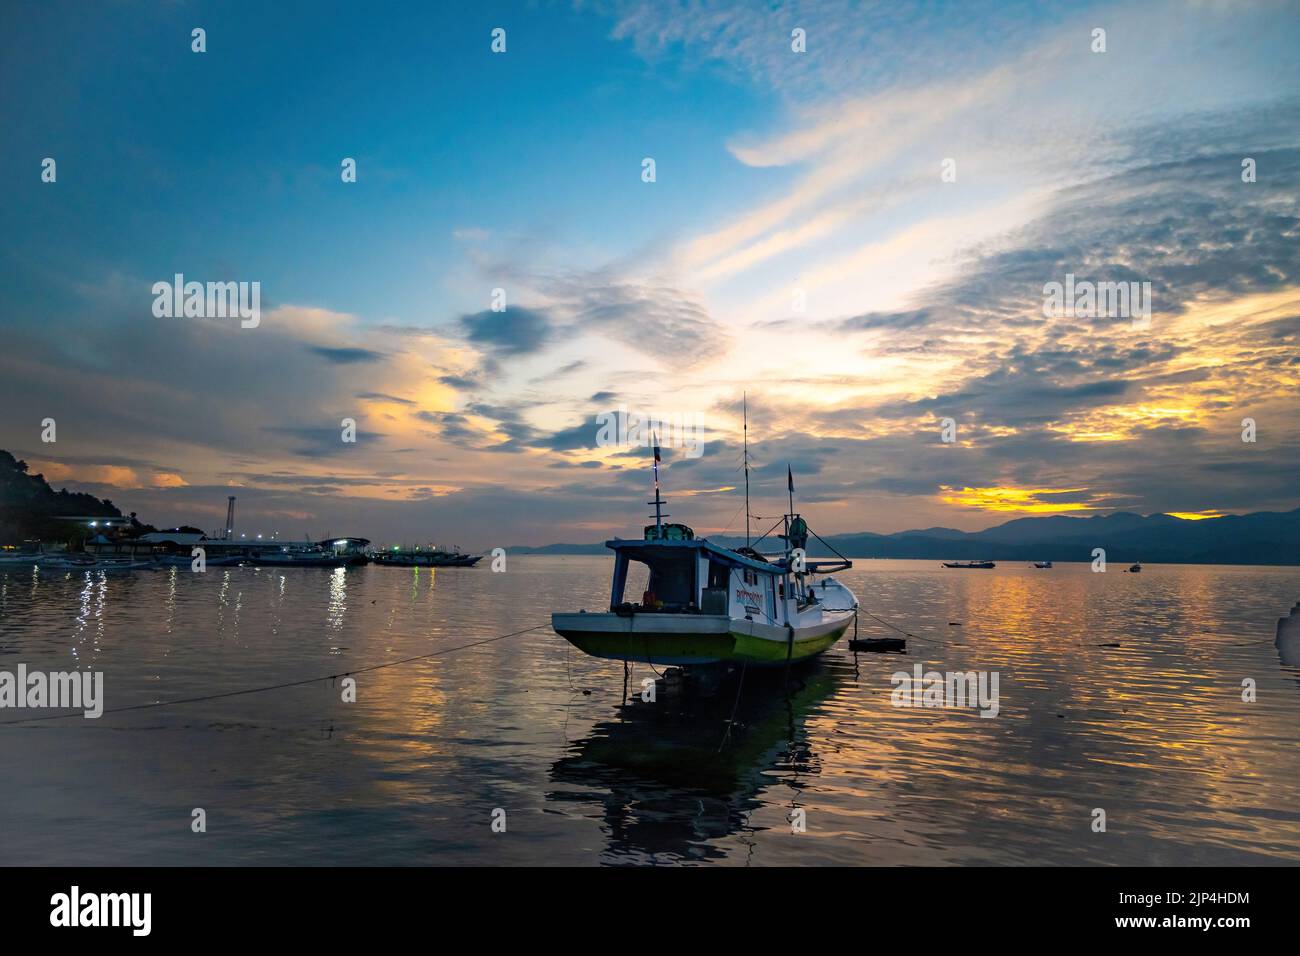 Small Wood Floating Fishing Platform in Sulawesi Indonesia Stock Image -  Image of riau, asia: 74943665